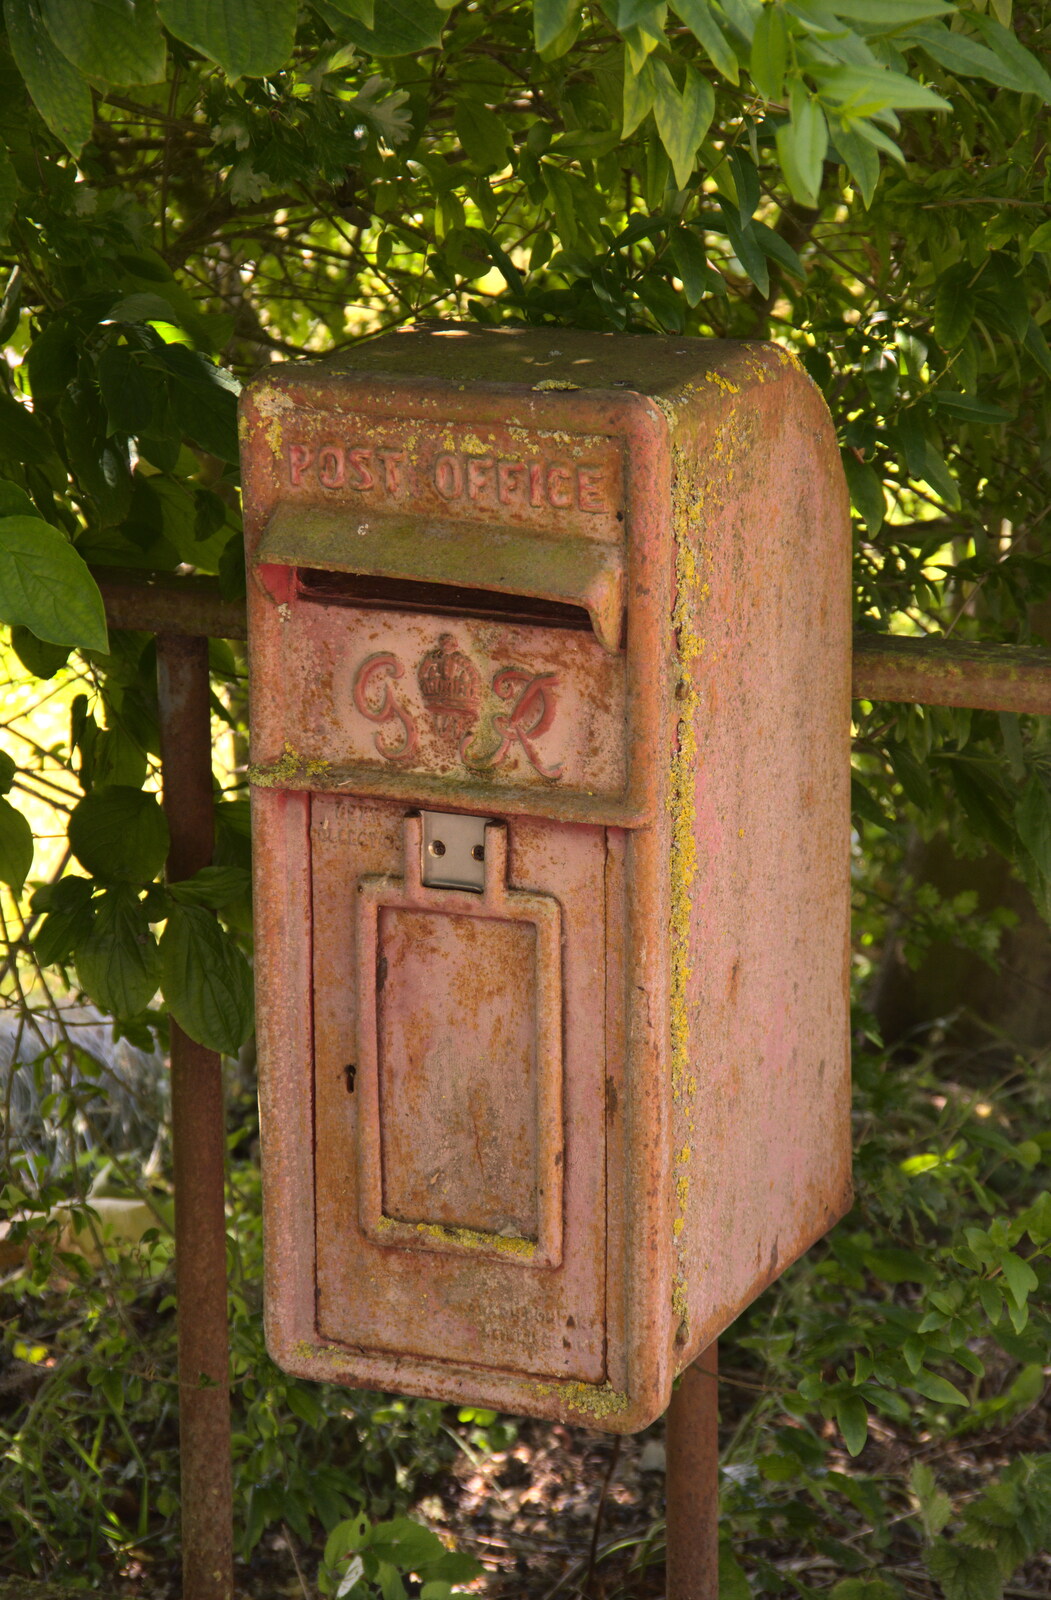 A rare GR post box near the Abbey from A Walk Around Abbey Bridges, Eye, Suffolk - 5th July 2020